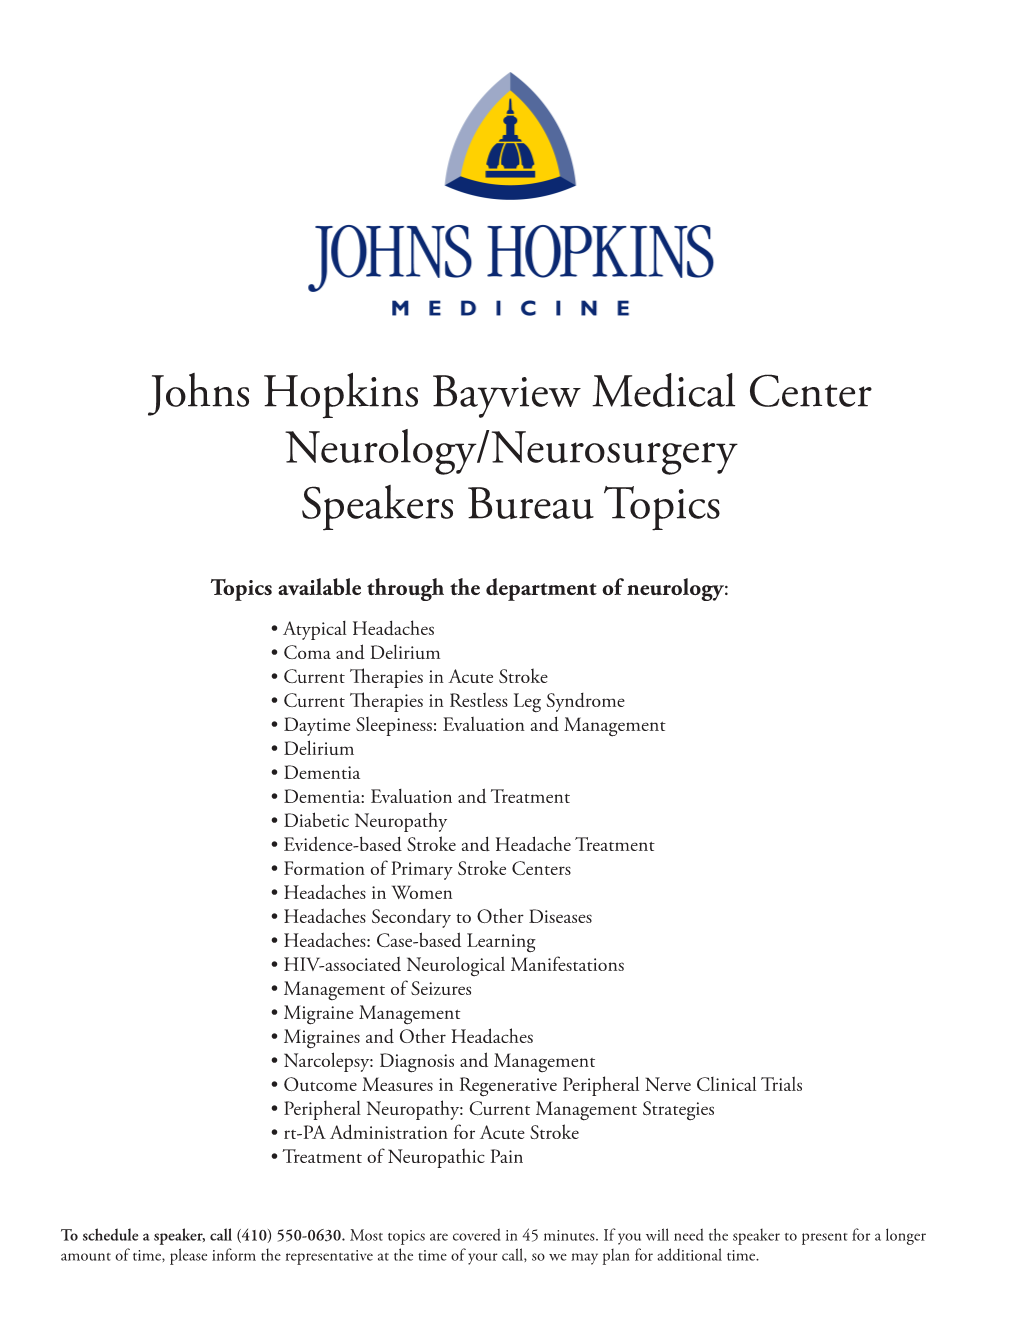 Johns Hopkins Bayview Medical Center Neurology/Neurosurgery Speakers Bureau Topics